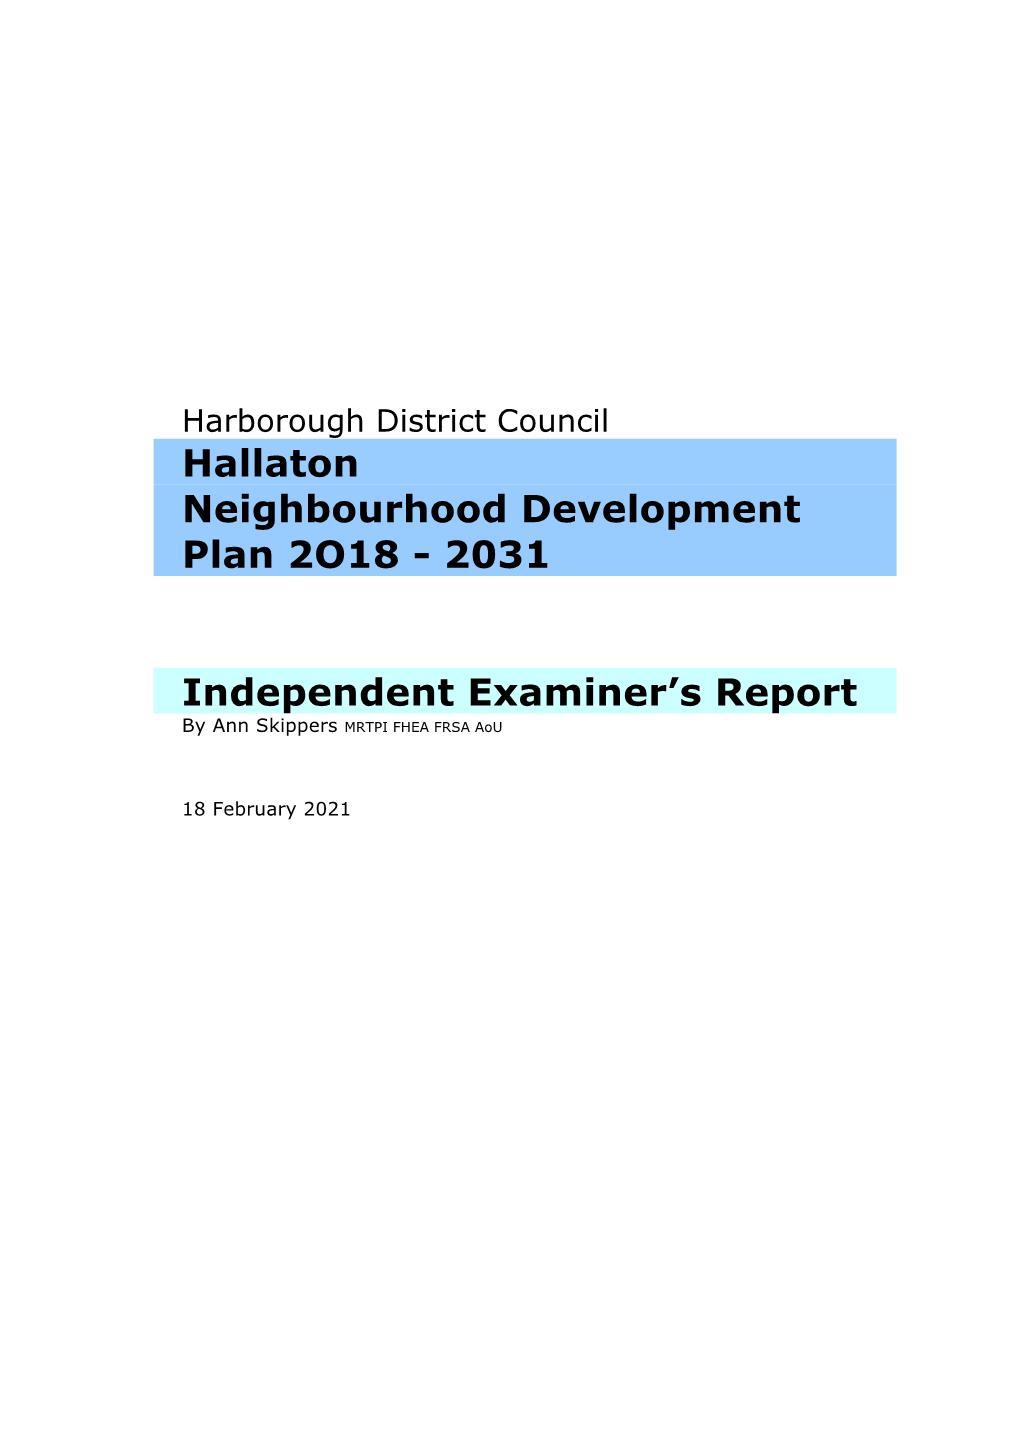 Hallaton Neighbourhood Development Plan 2O18 - 2031